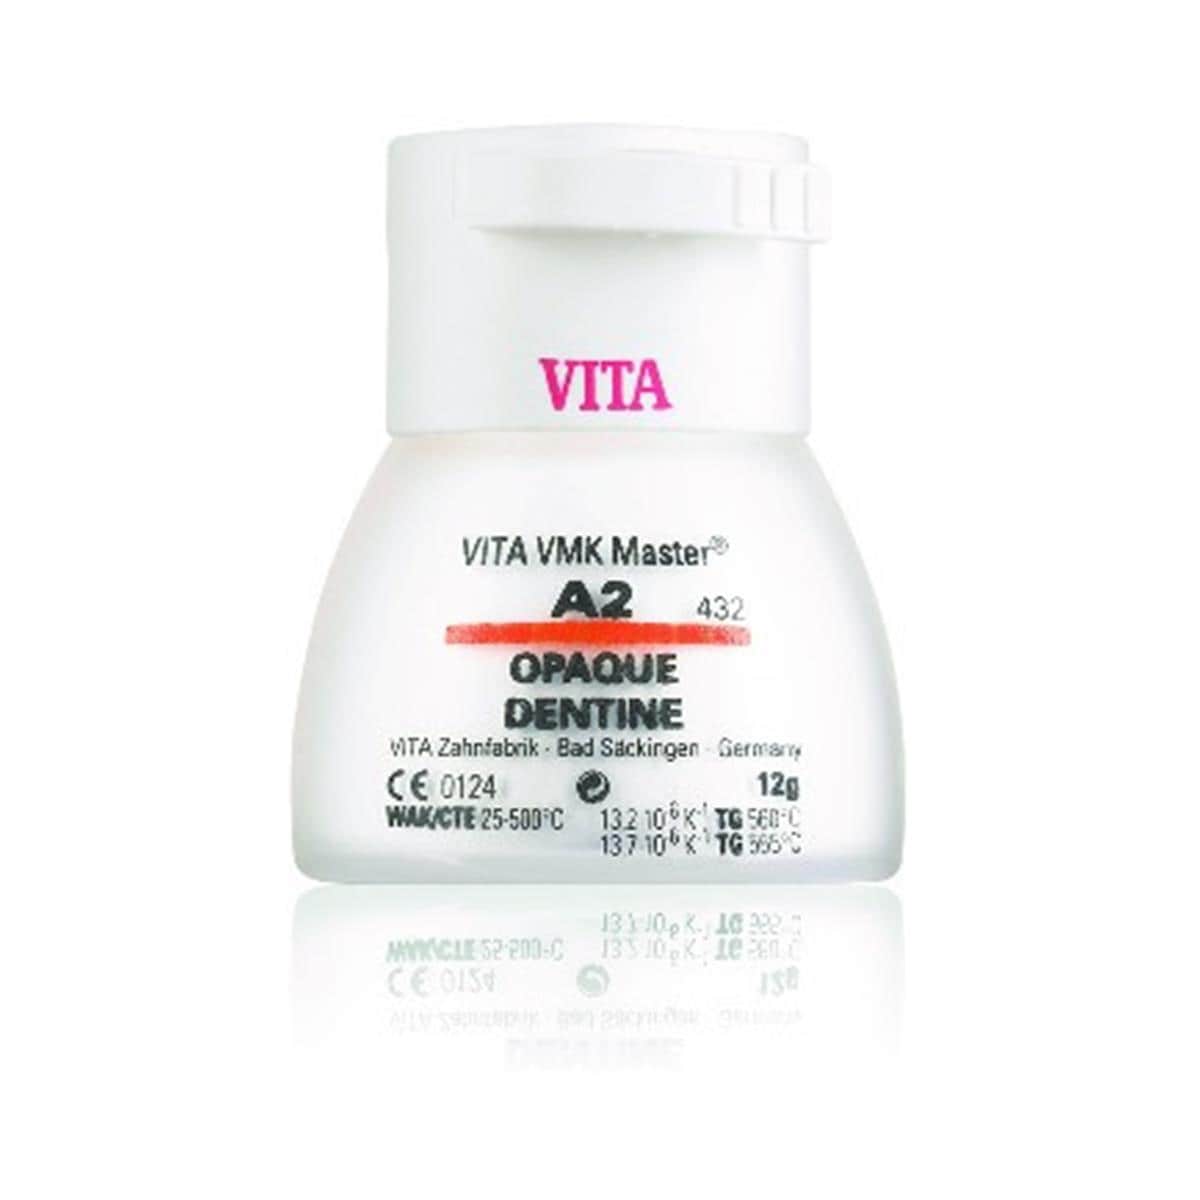 VMK Master VITA - Dentine Opaque - C4 - Le flacon de 12 g